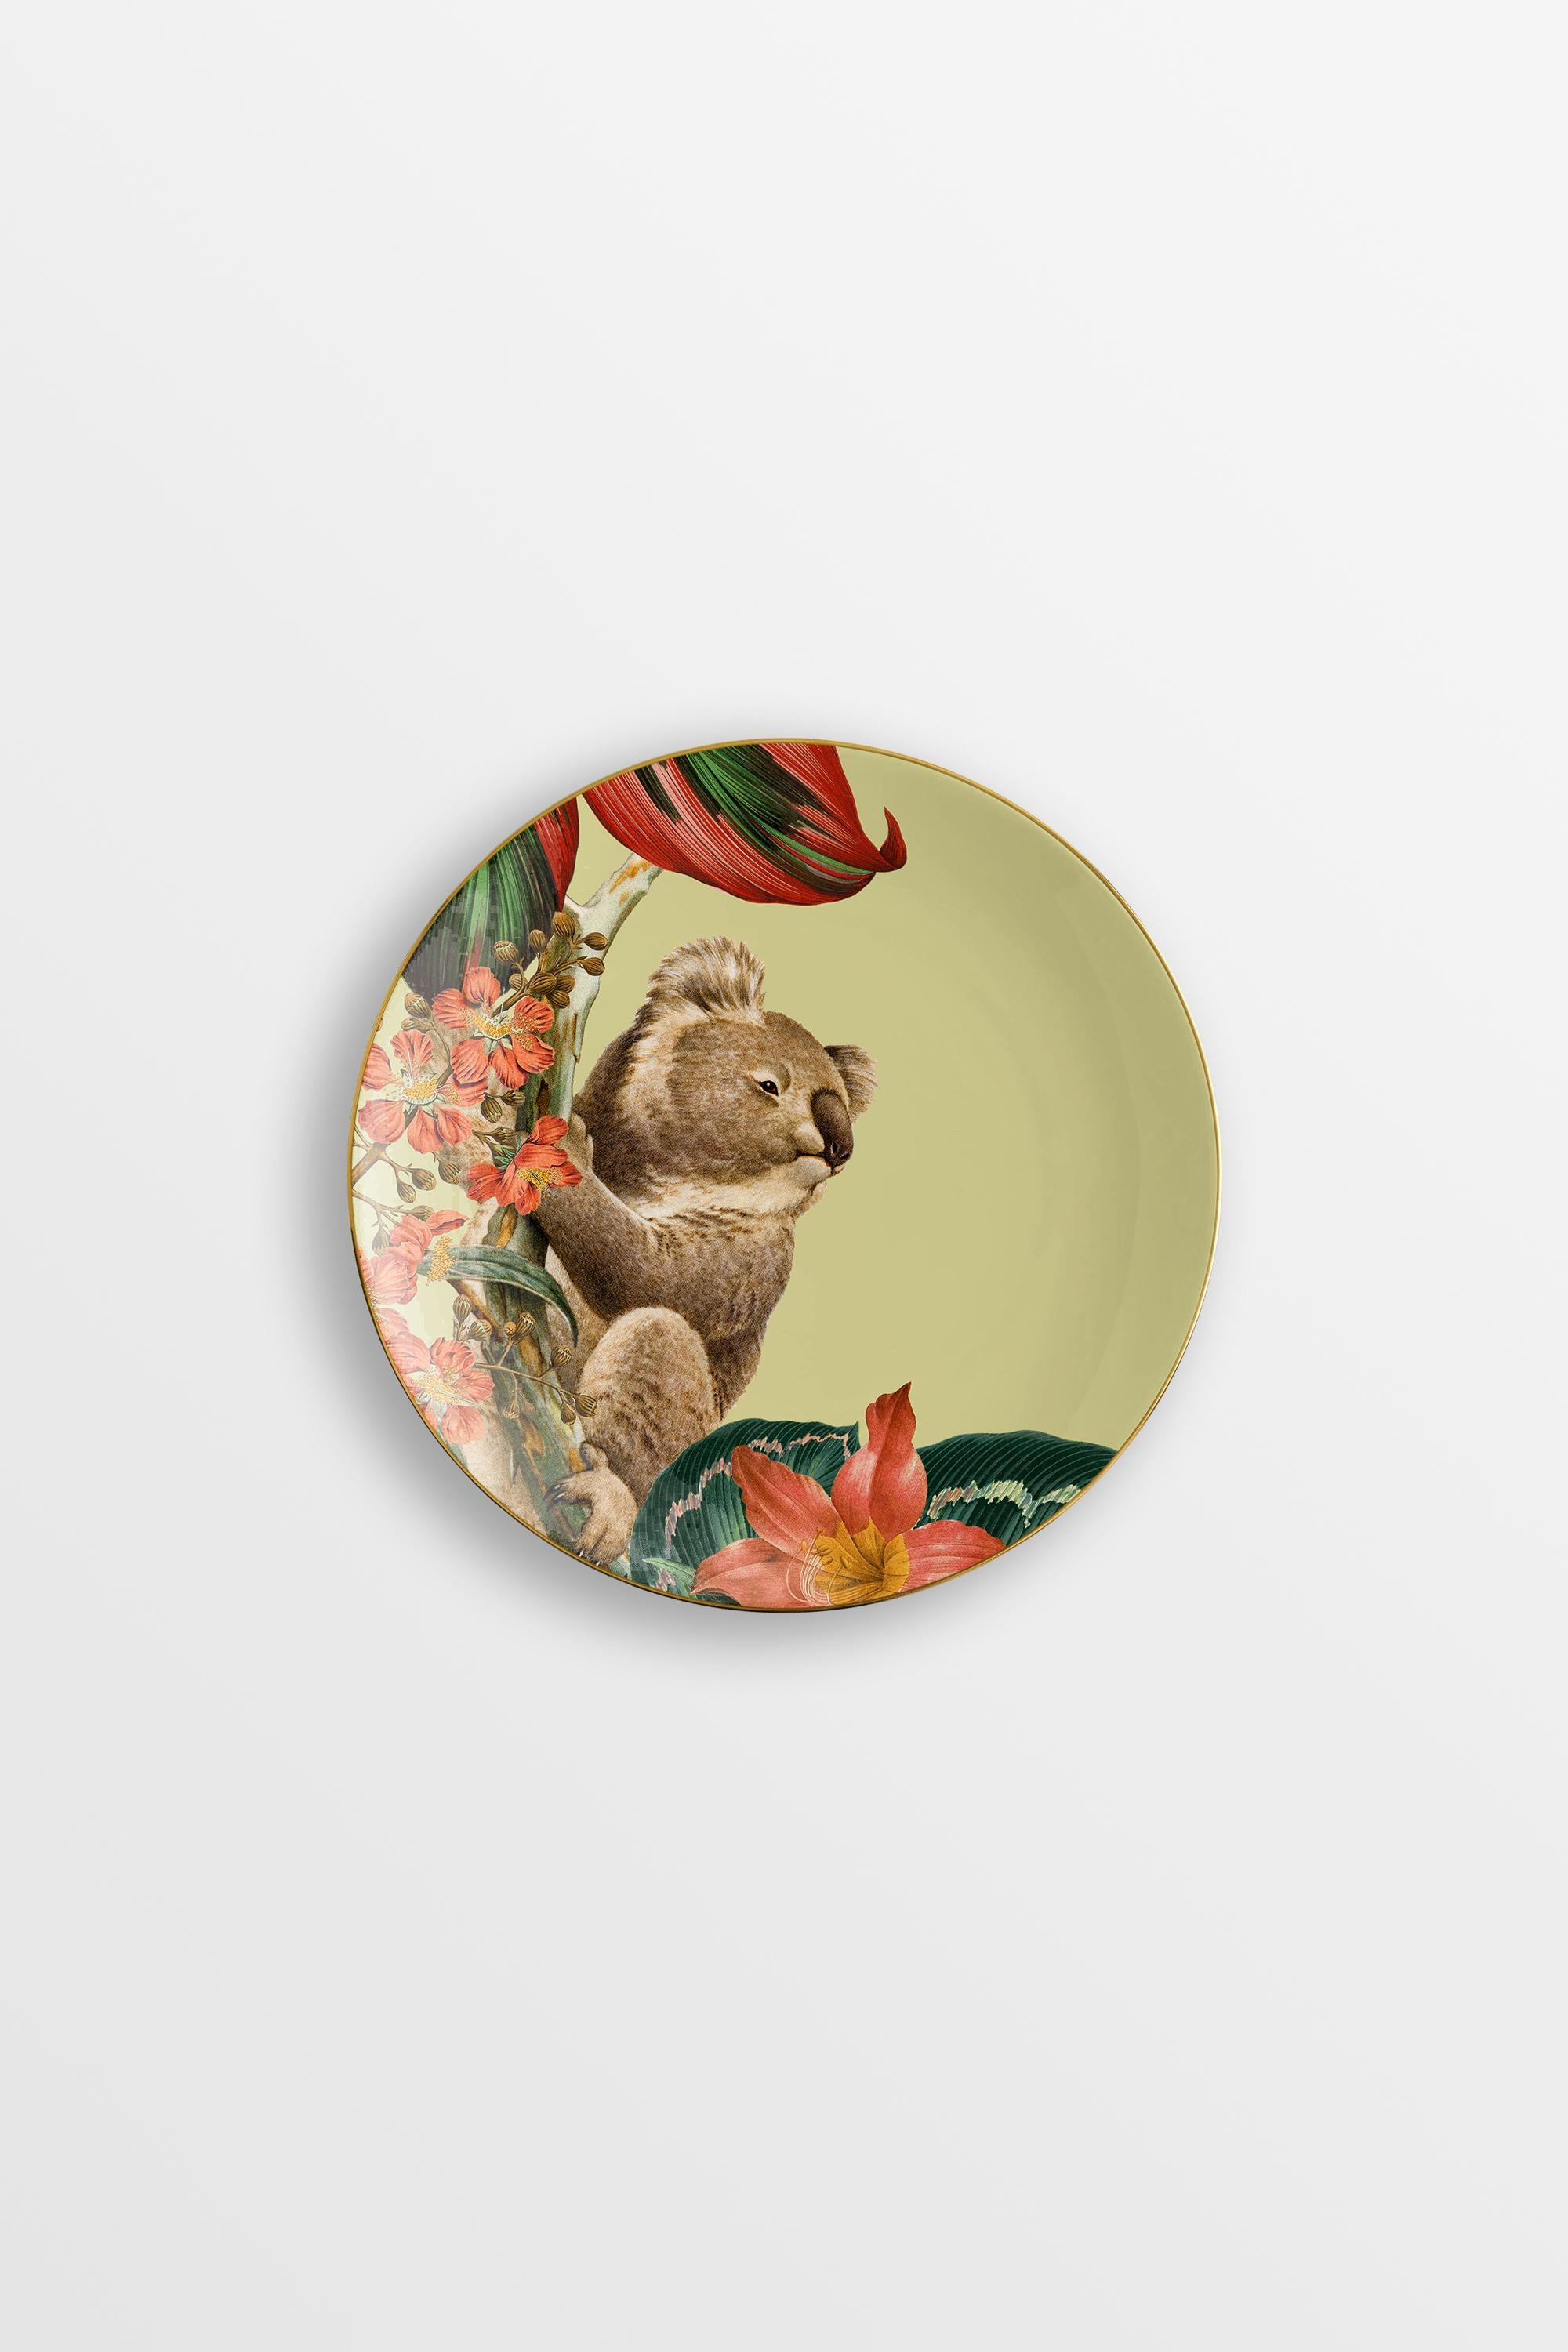 Animalia, Six Contemporary Porcelain Bread Plates with Decorative Design For Sale 2